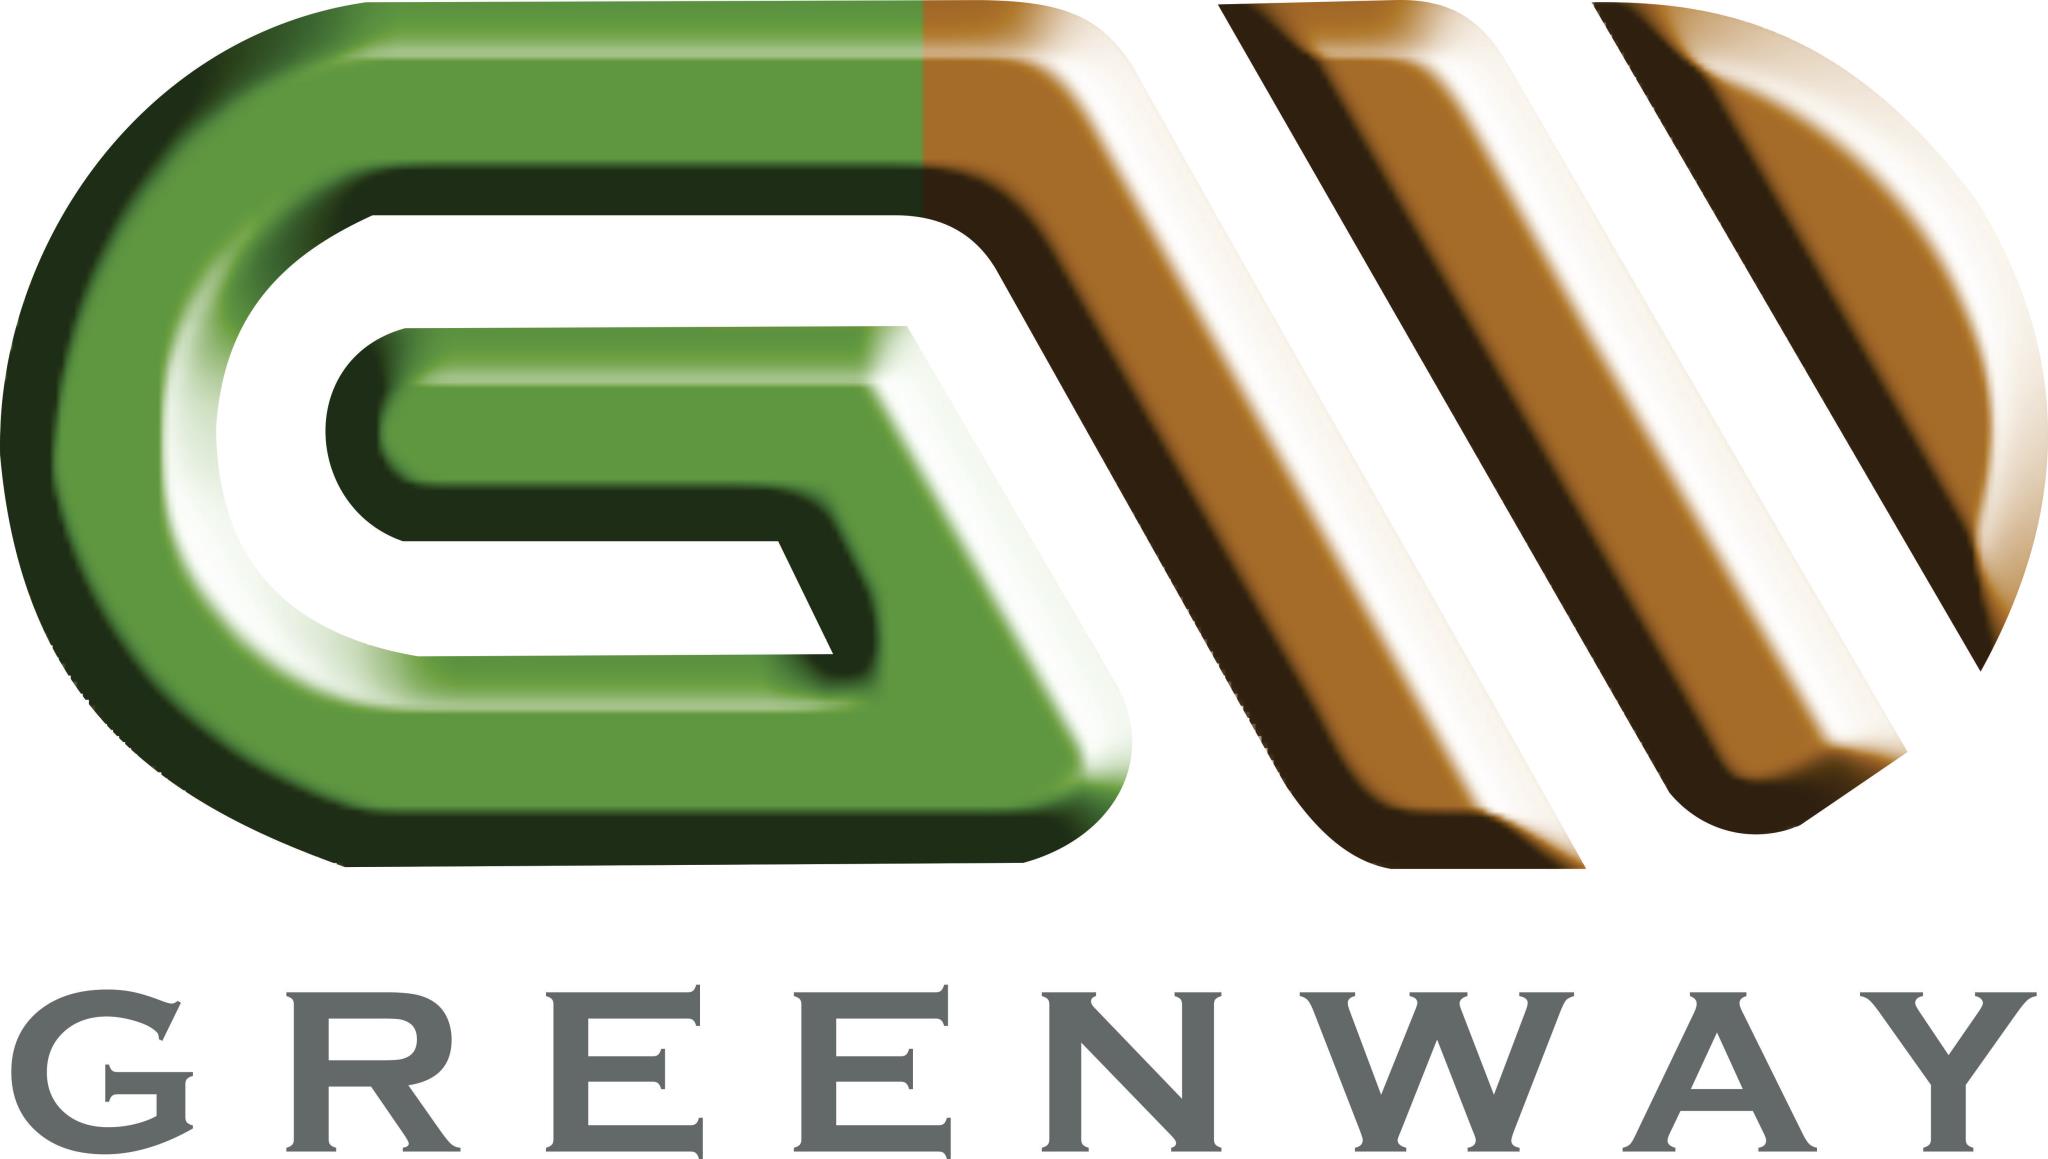 Greenway Enterprises Inc logo